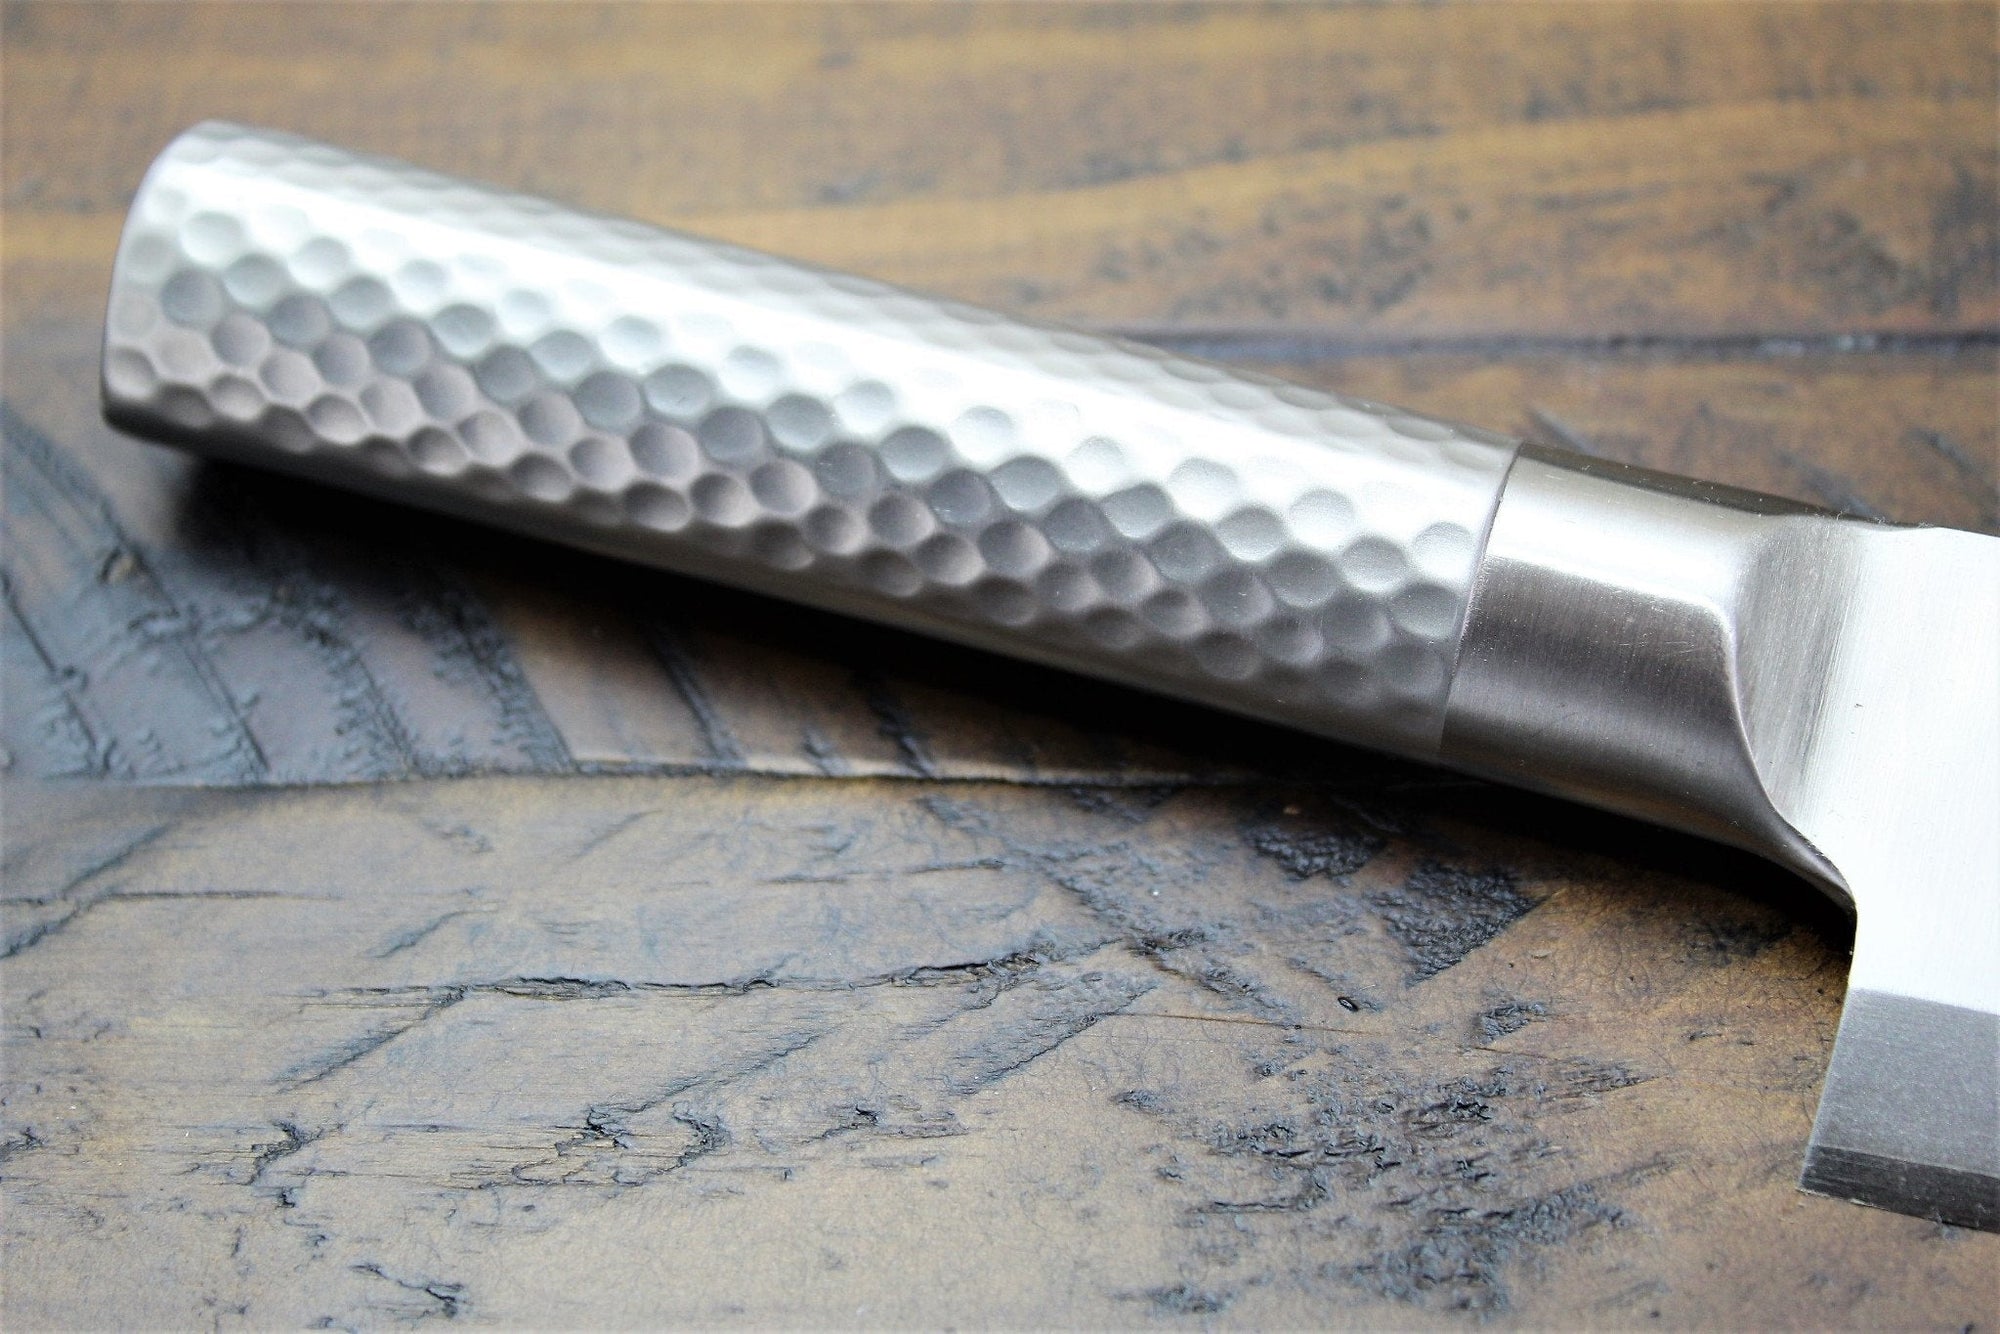  JapanBargain, Japanese Deba Knife, Stainless Steel Chef's Knife,  Made in Japan (1, 160mm): Deba Knives: Home & Kitchen